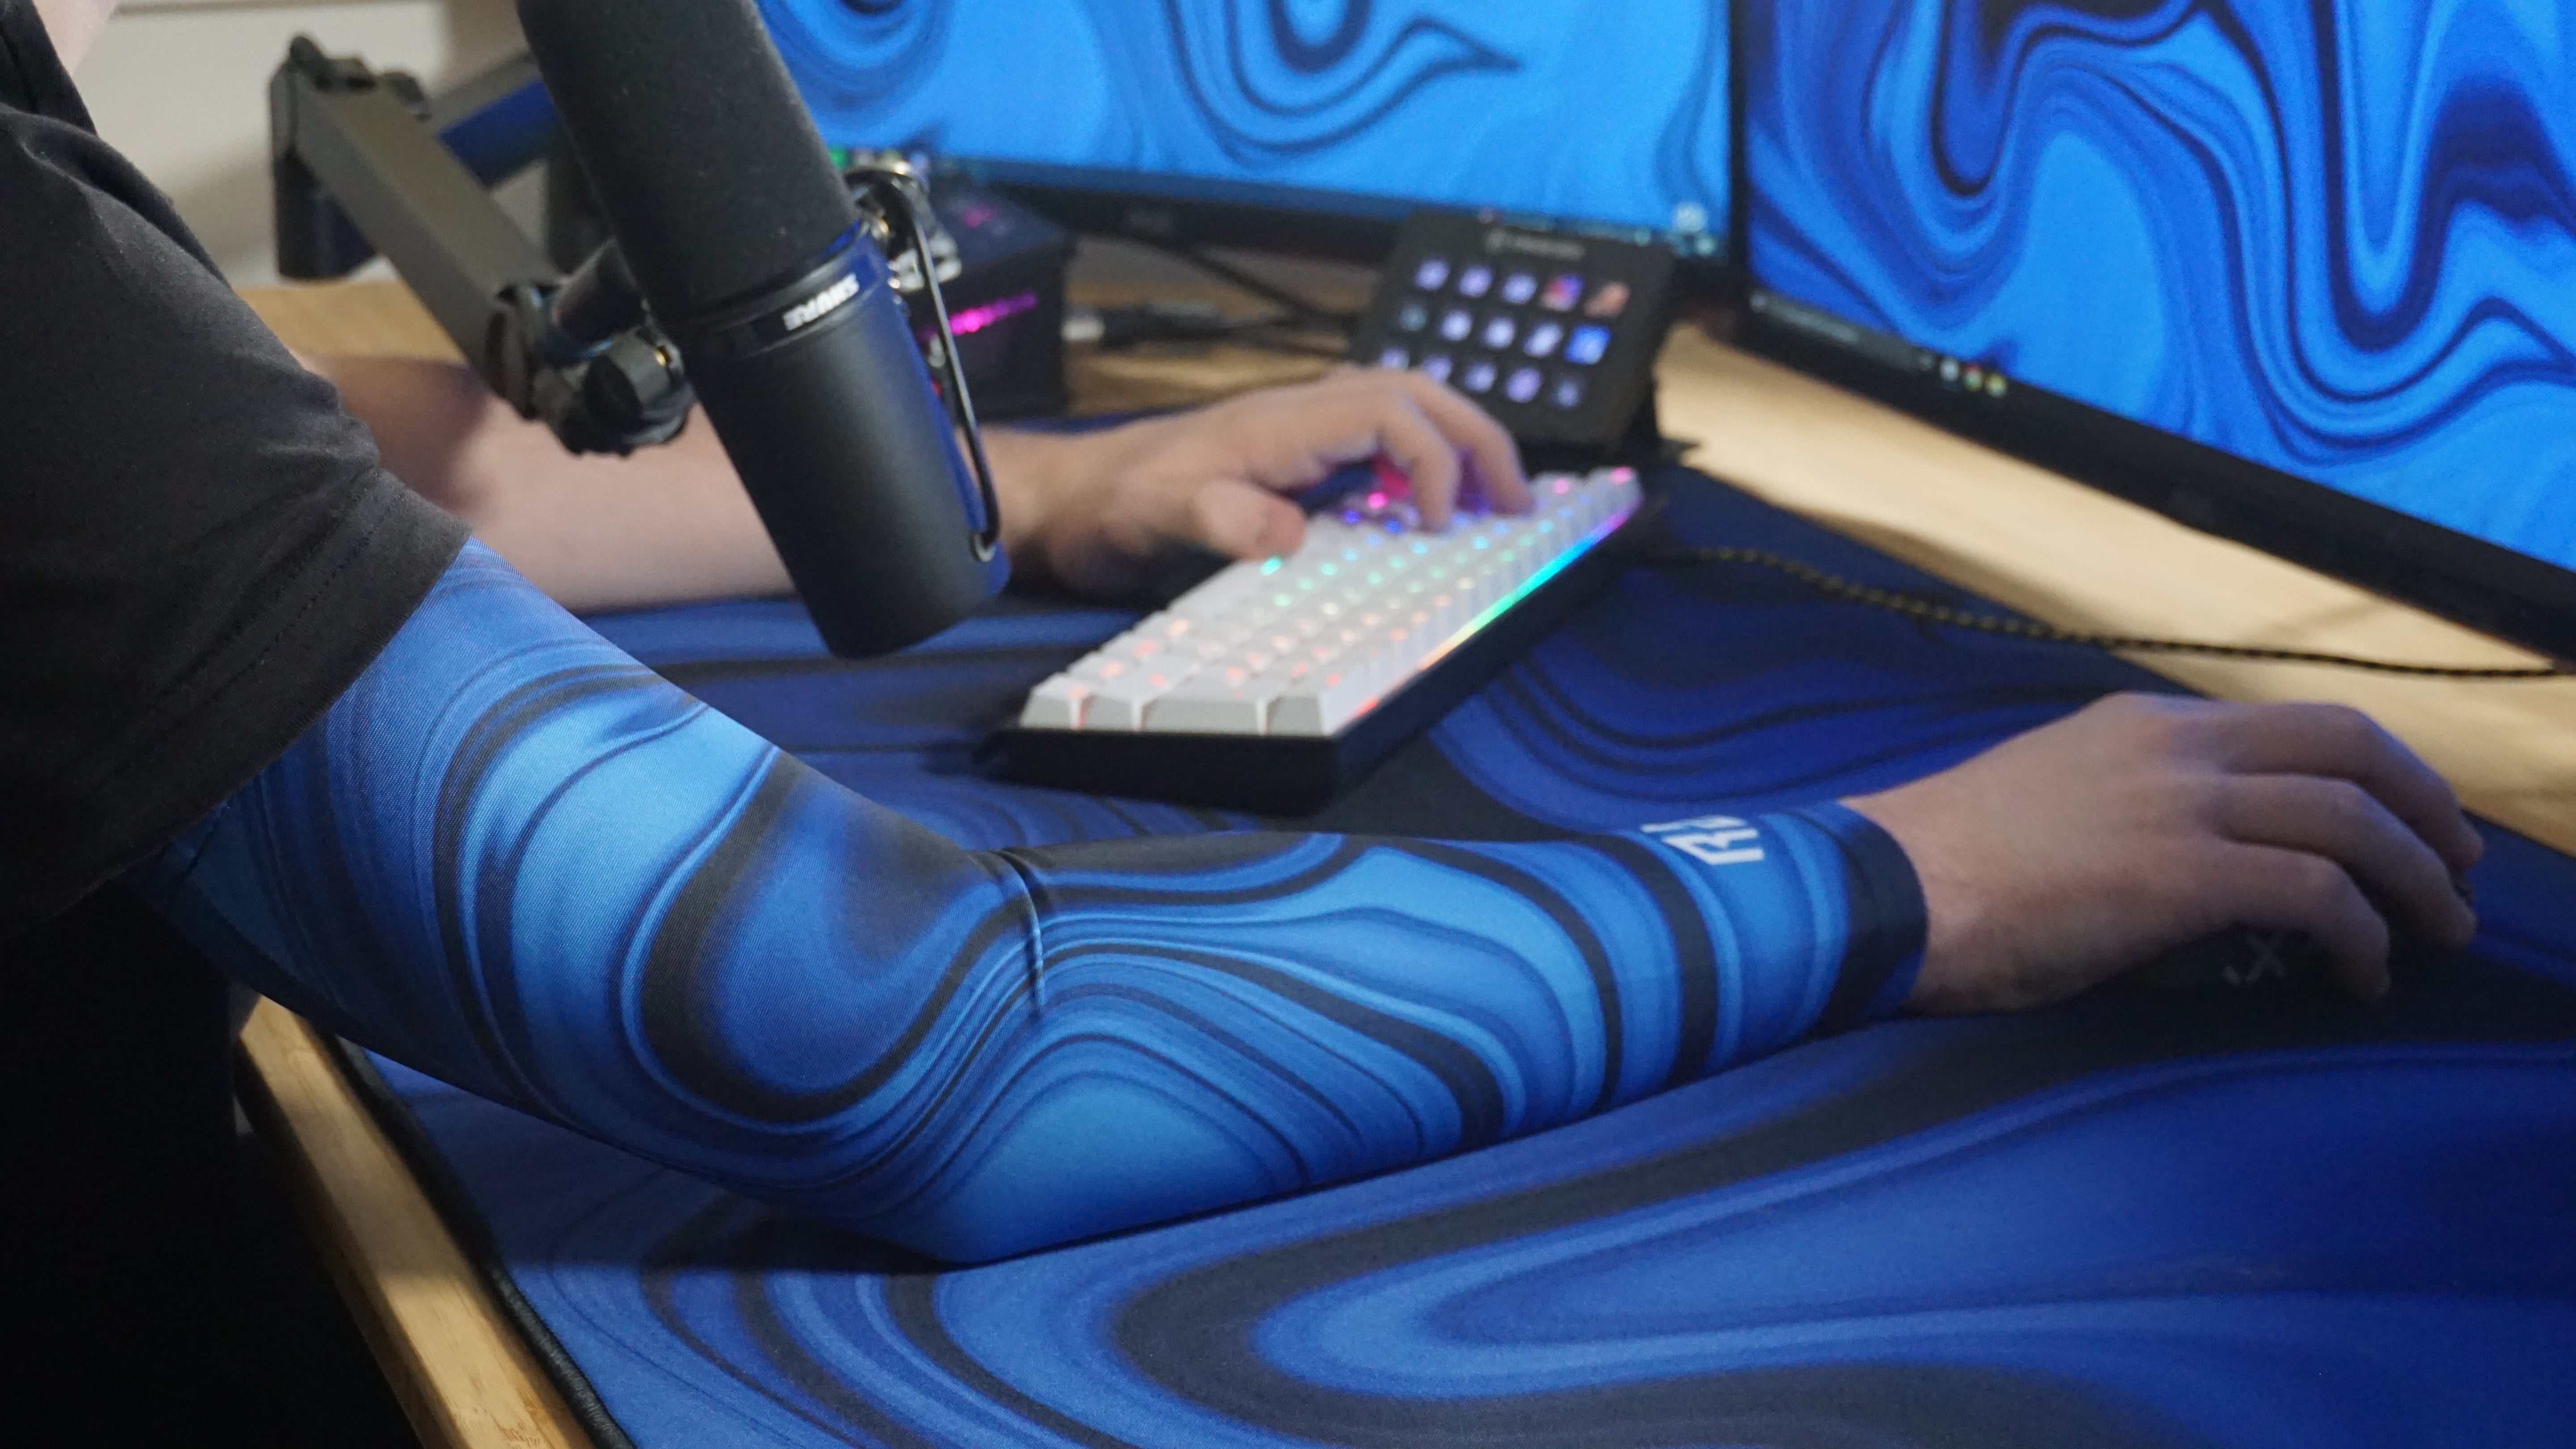 RZ BLUE BUNDLE - Mousepad (Speed) + Arm Sleeve